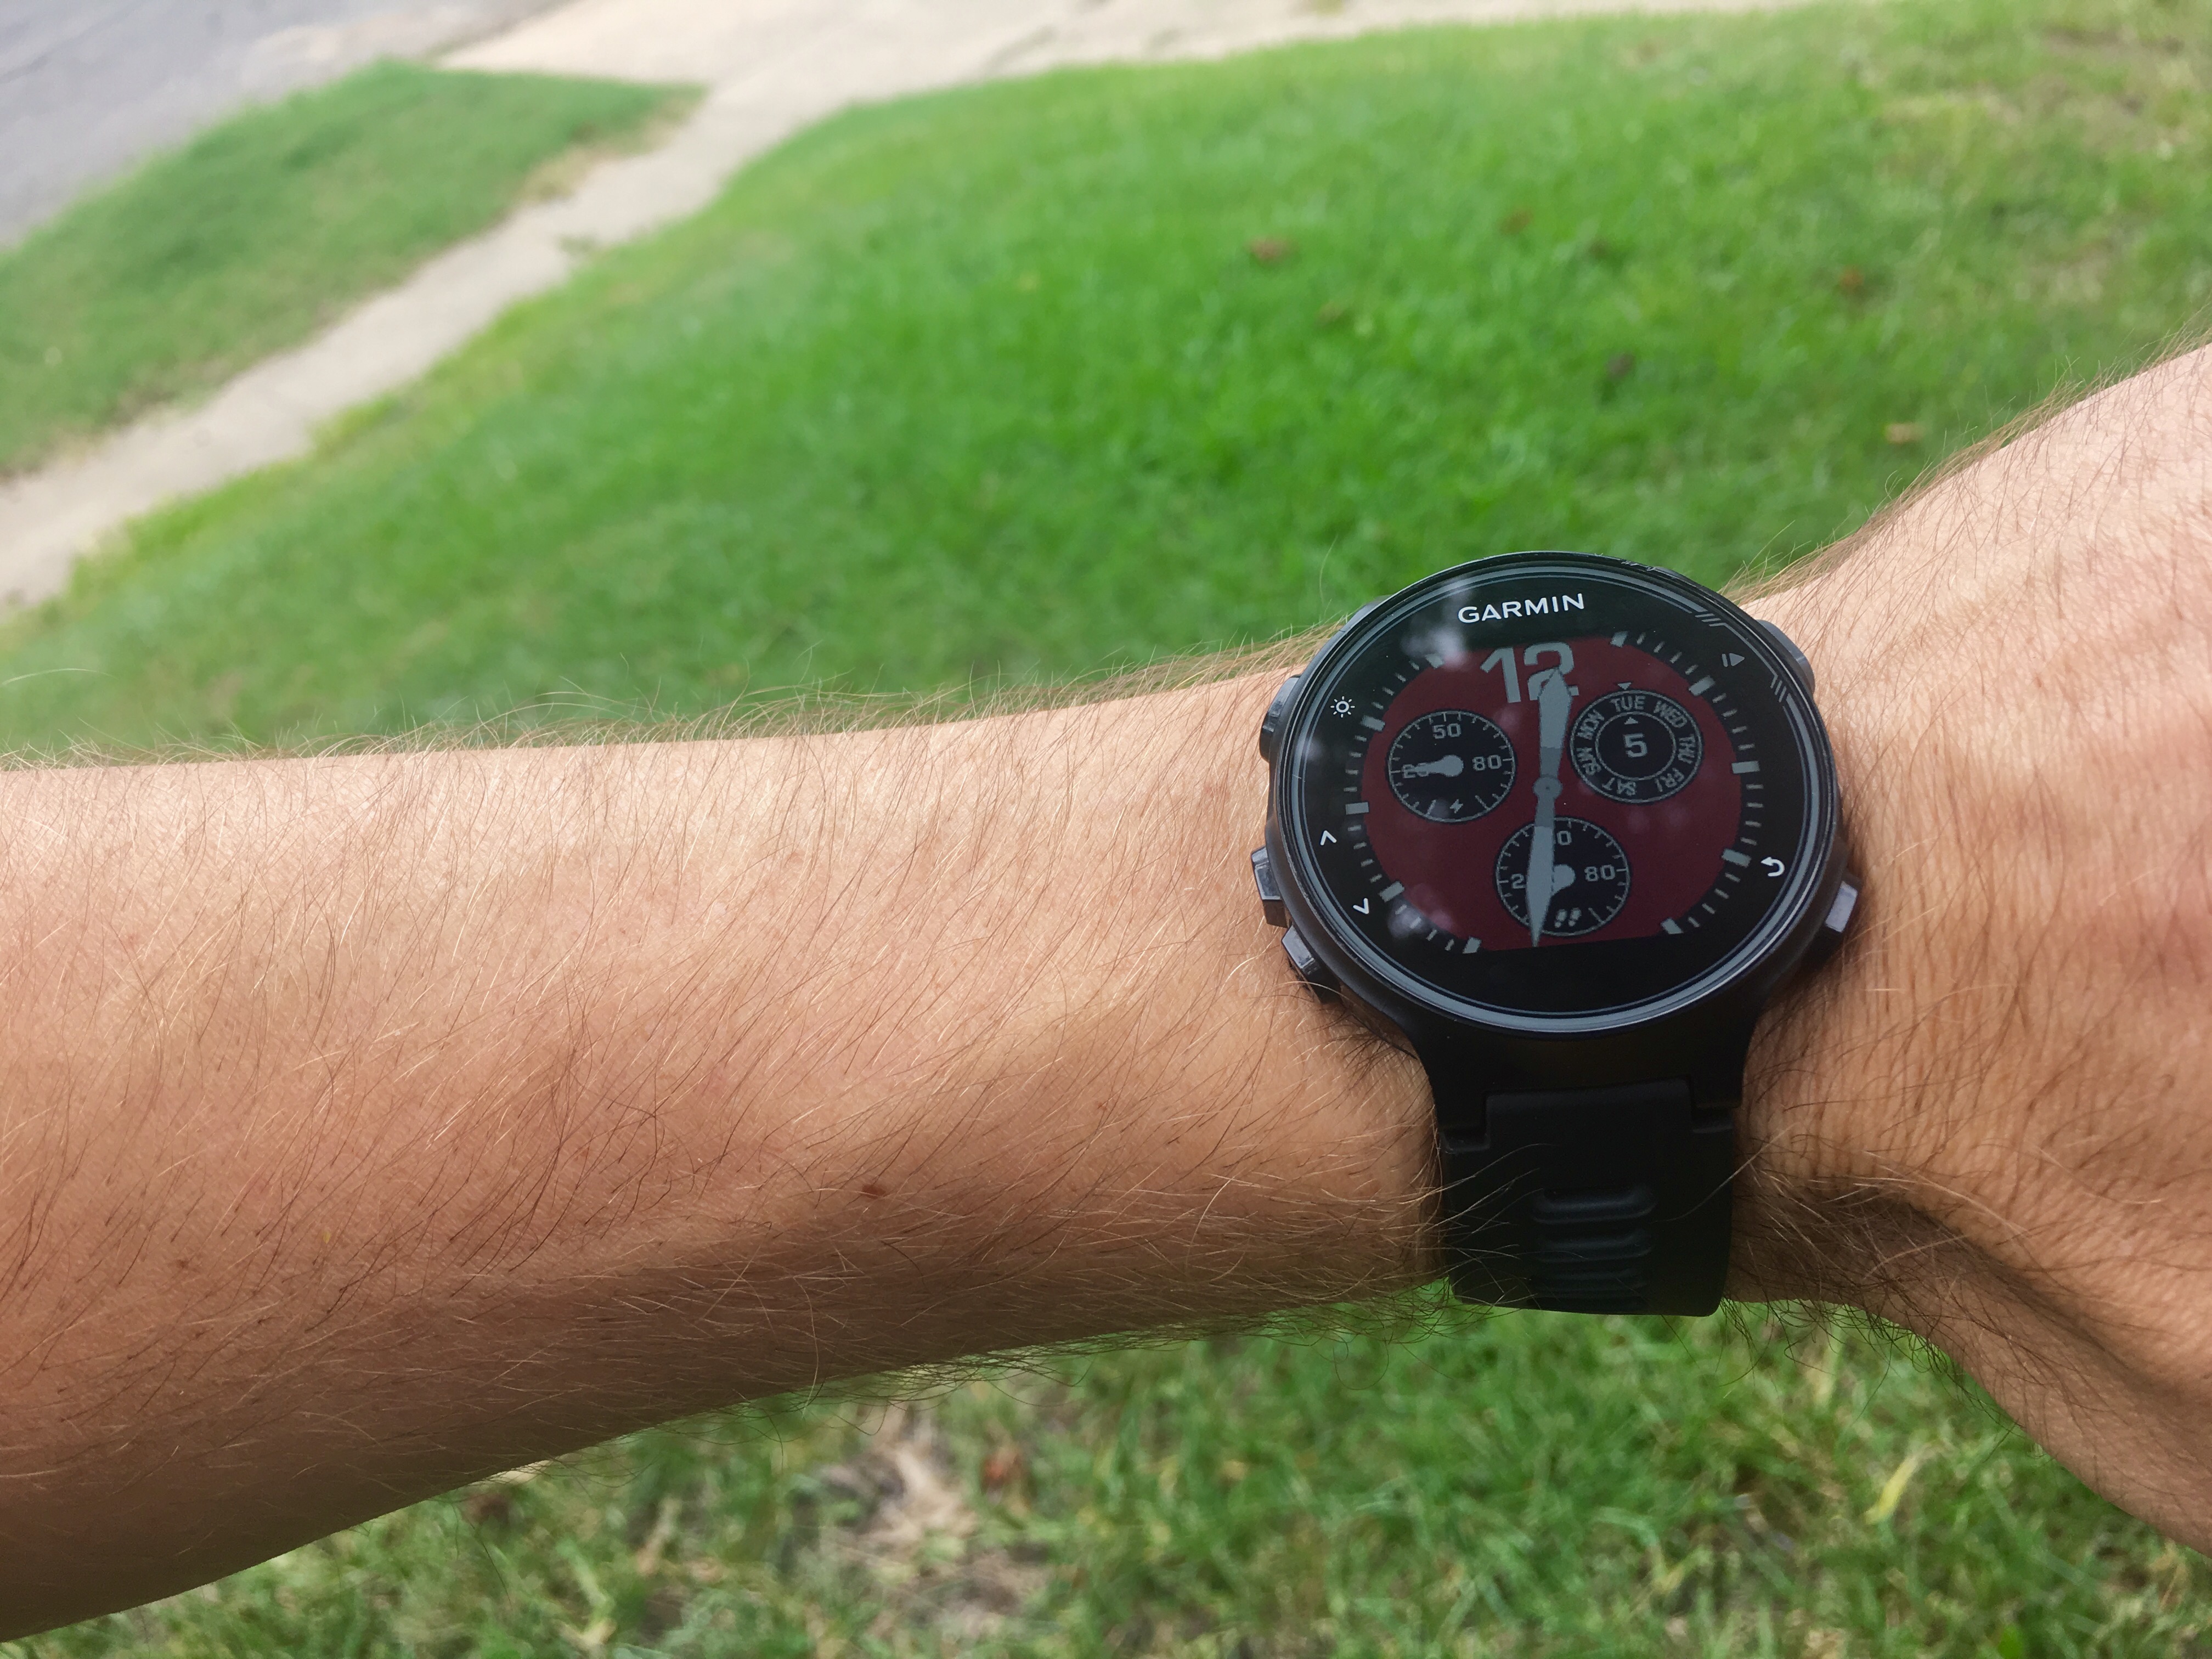 Corea Perplejo Escuela de posgrado Garmin 735XT GPS watch review - Long run life